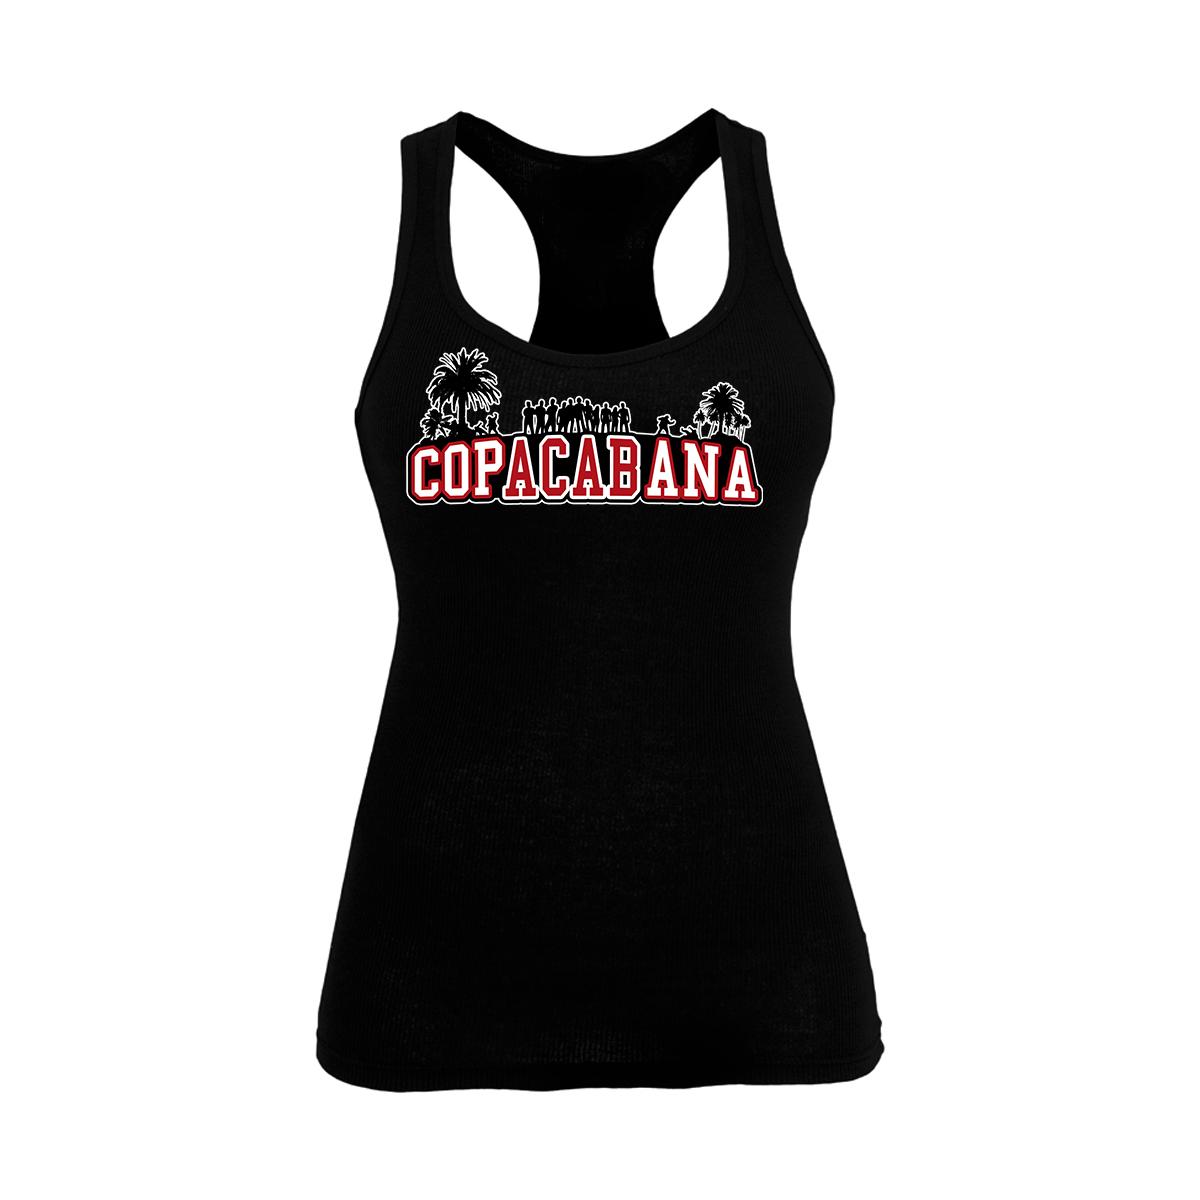 Copacabana - rot-weiß - Frauen Tank Top - schwarz